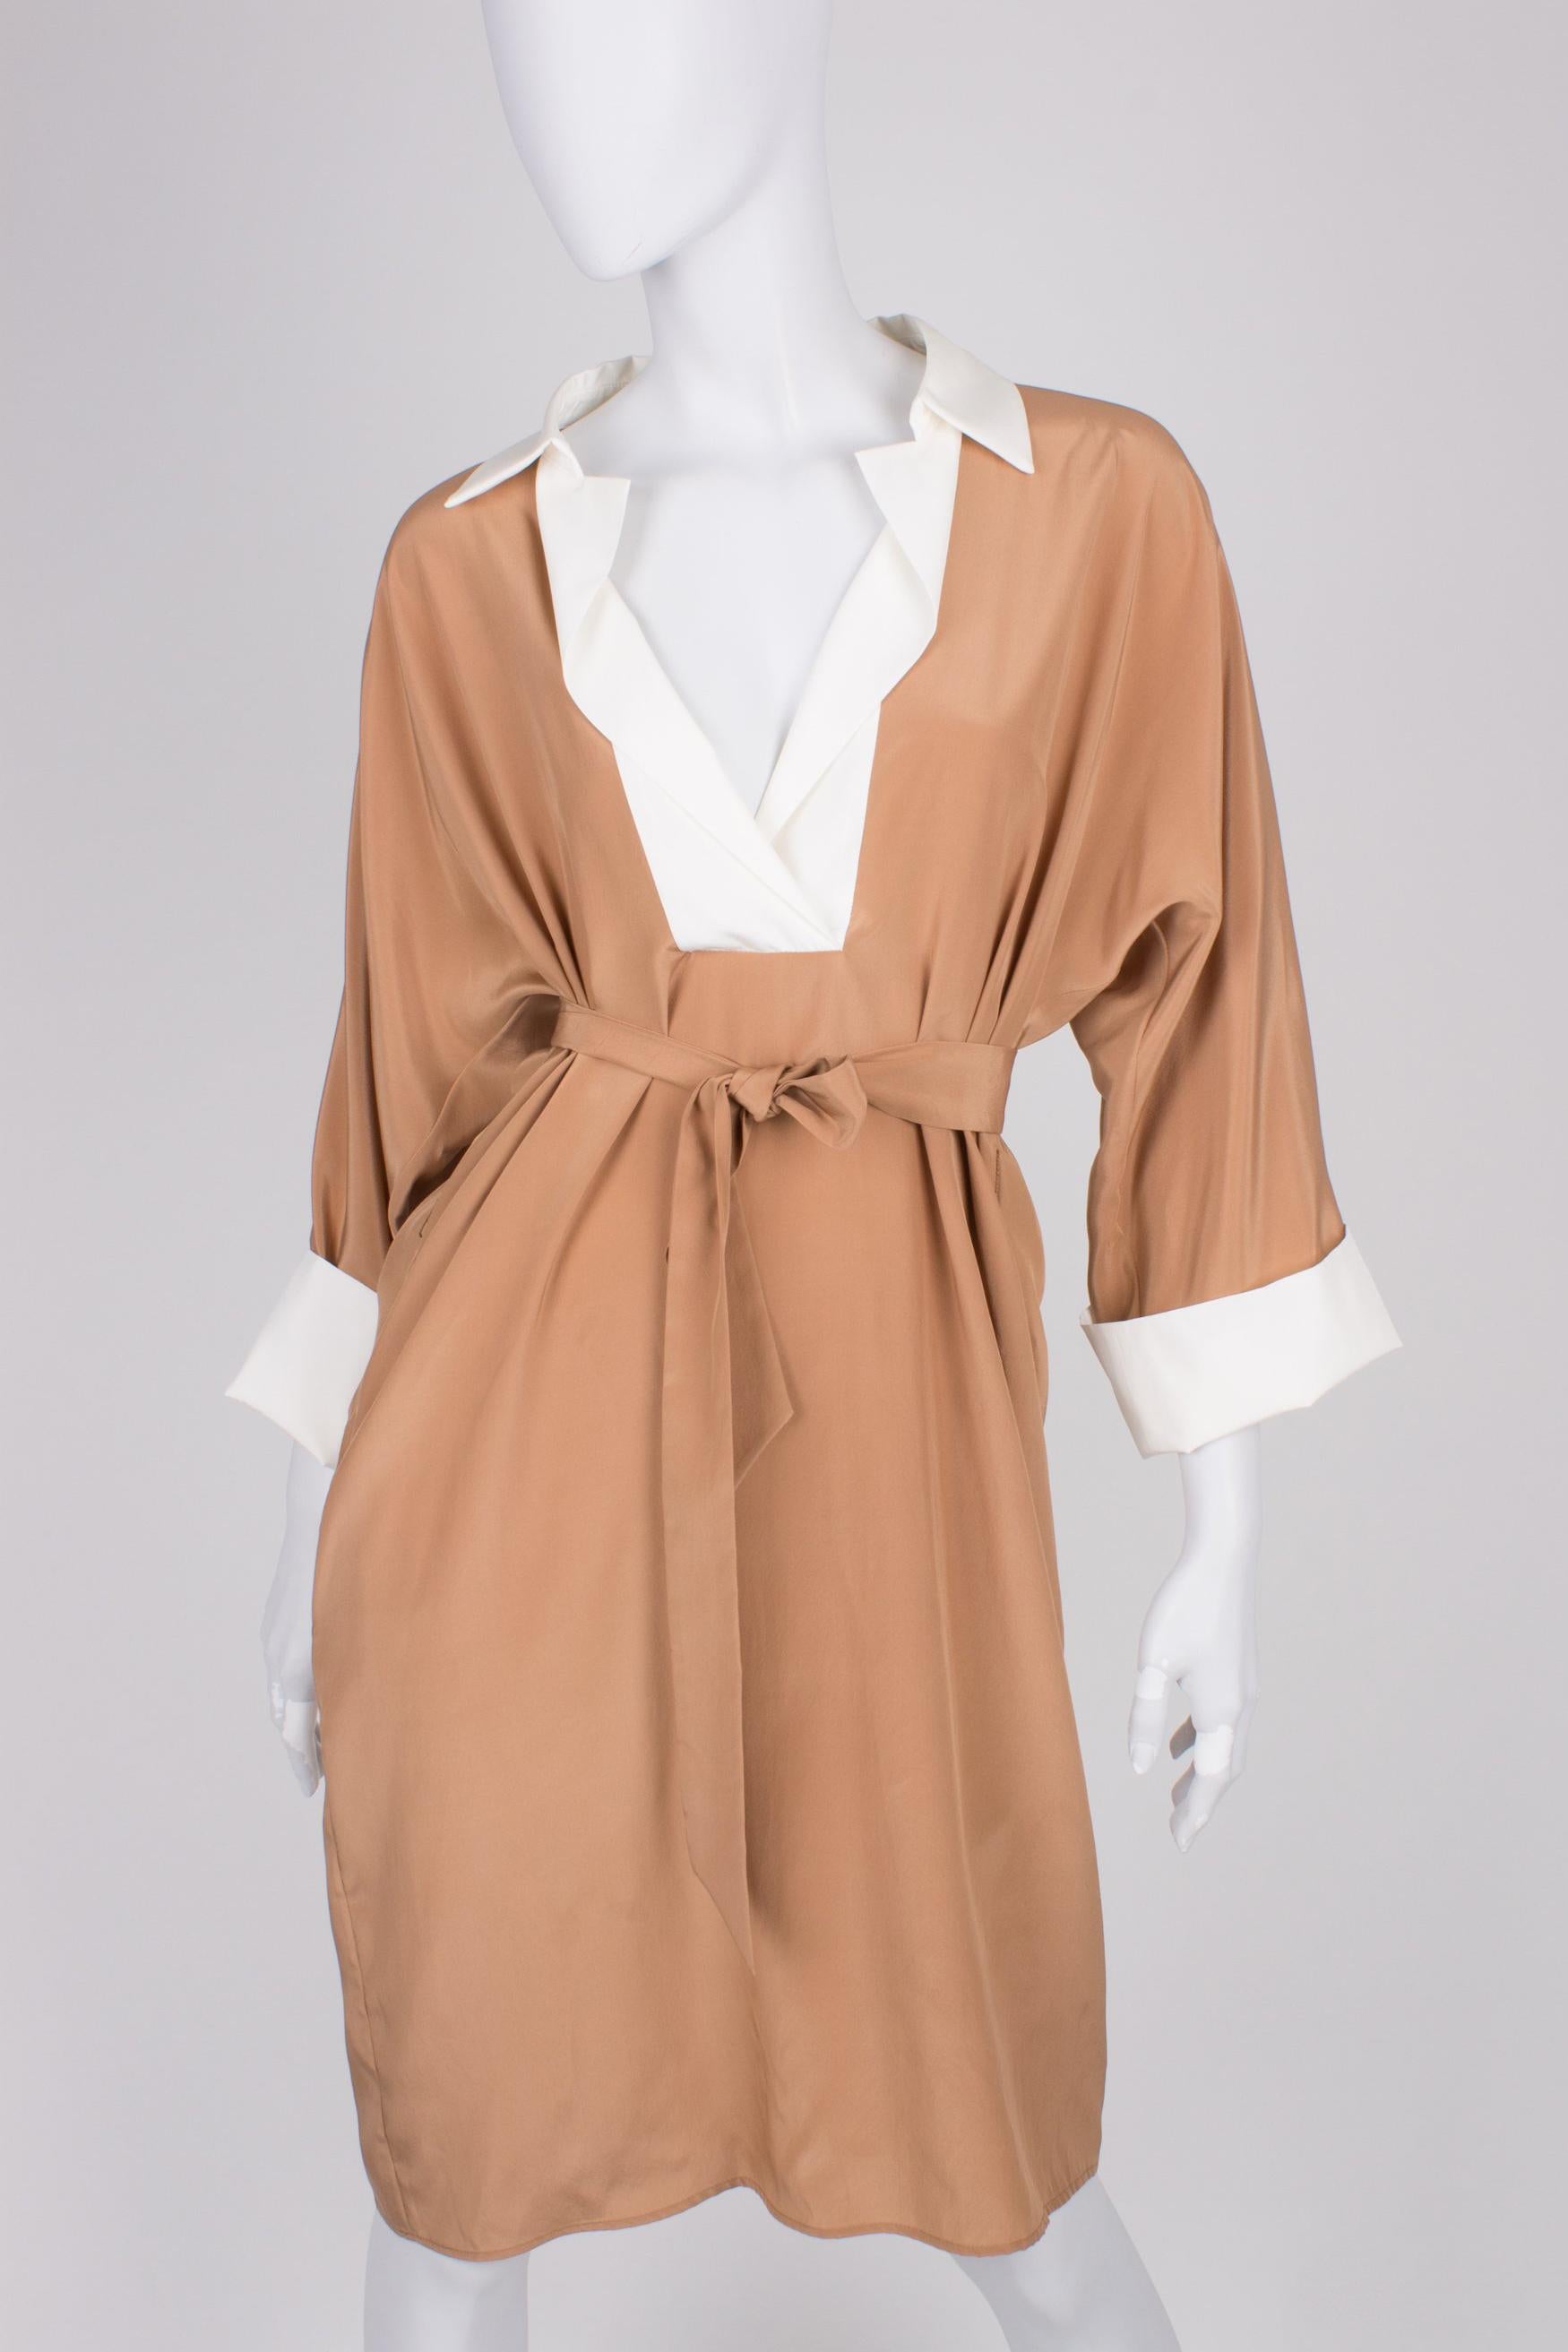 Brown Salvatore Ferragamo Silk Dress - camel/white